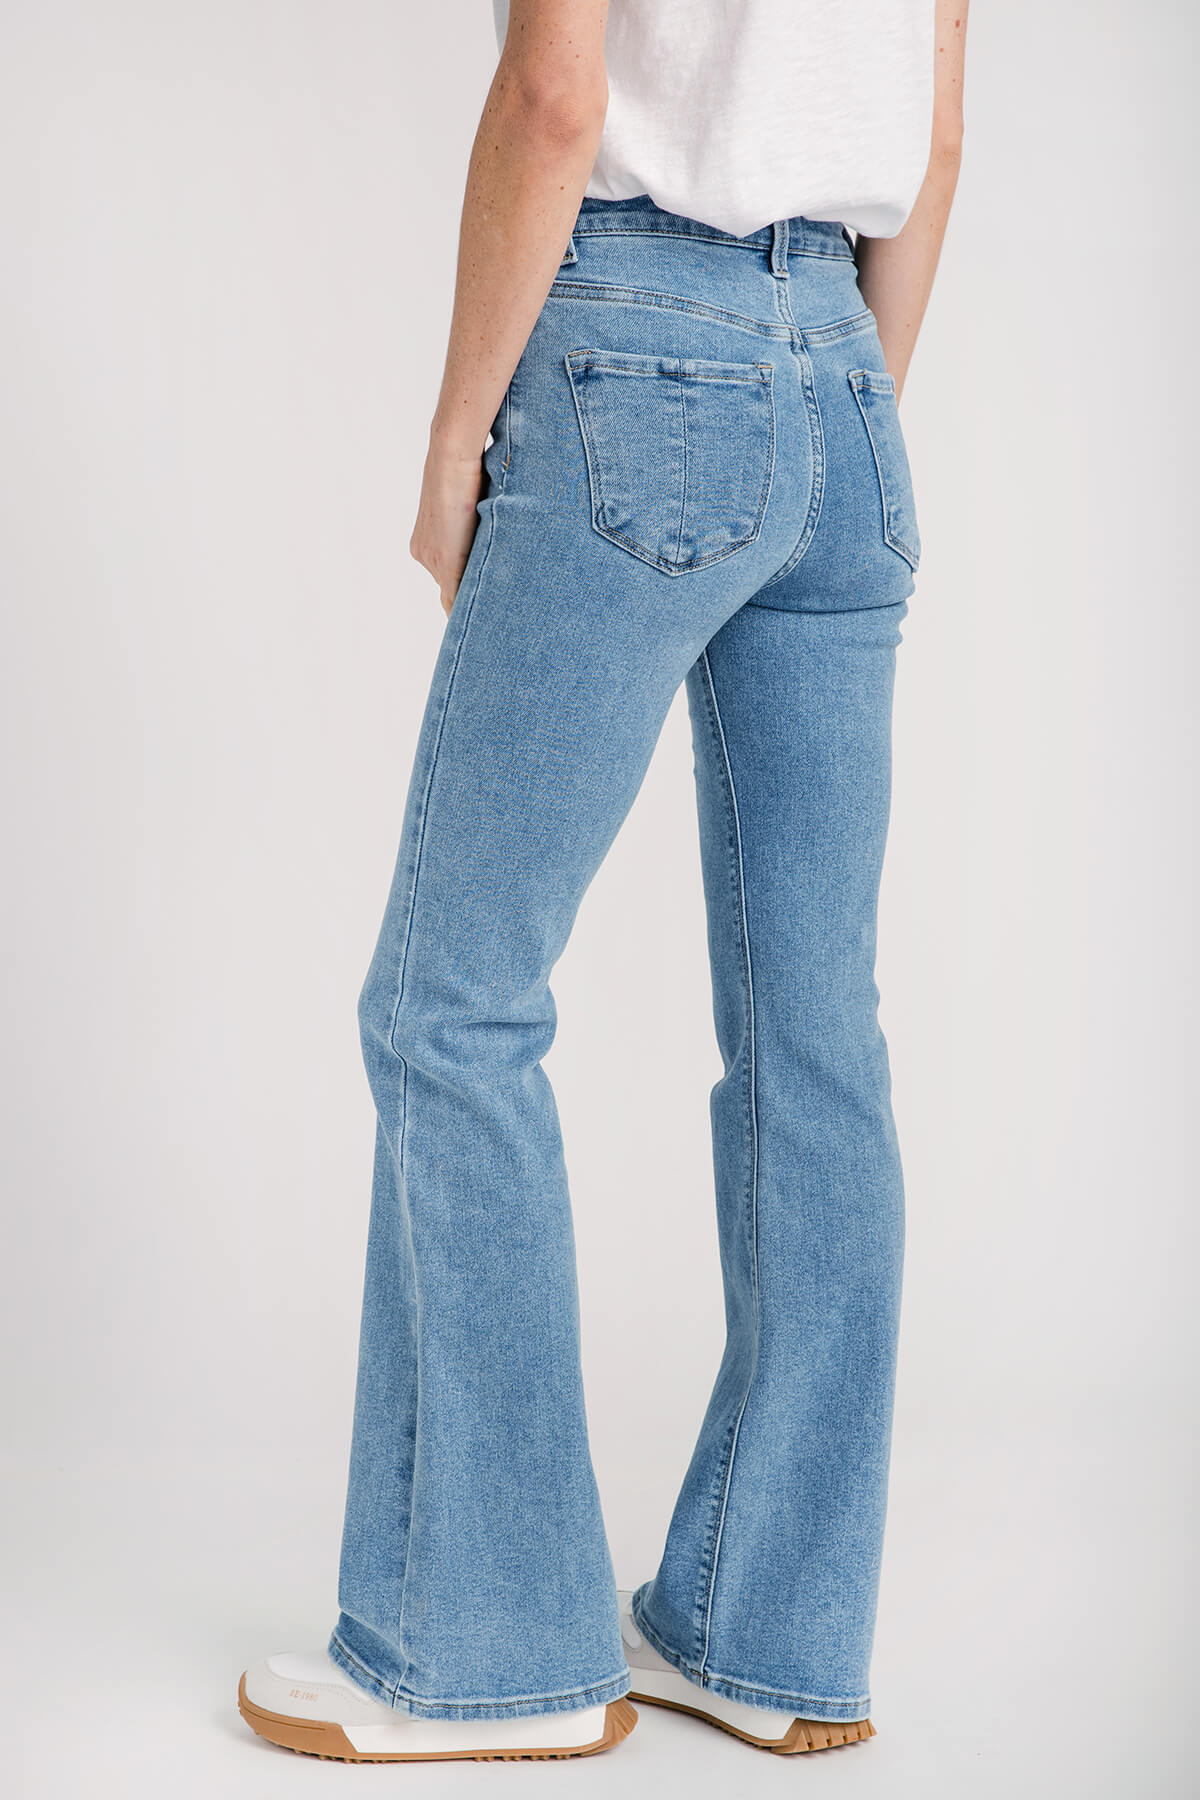 Risen Olivia High Rise Flare Jeans